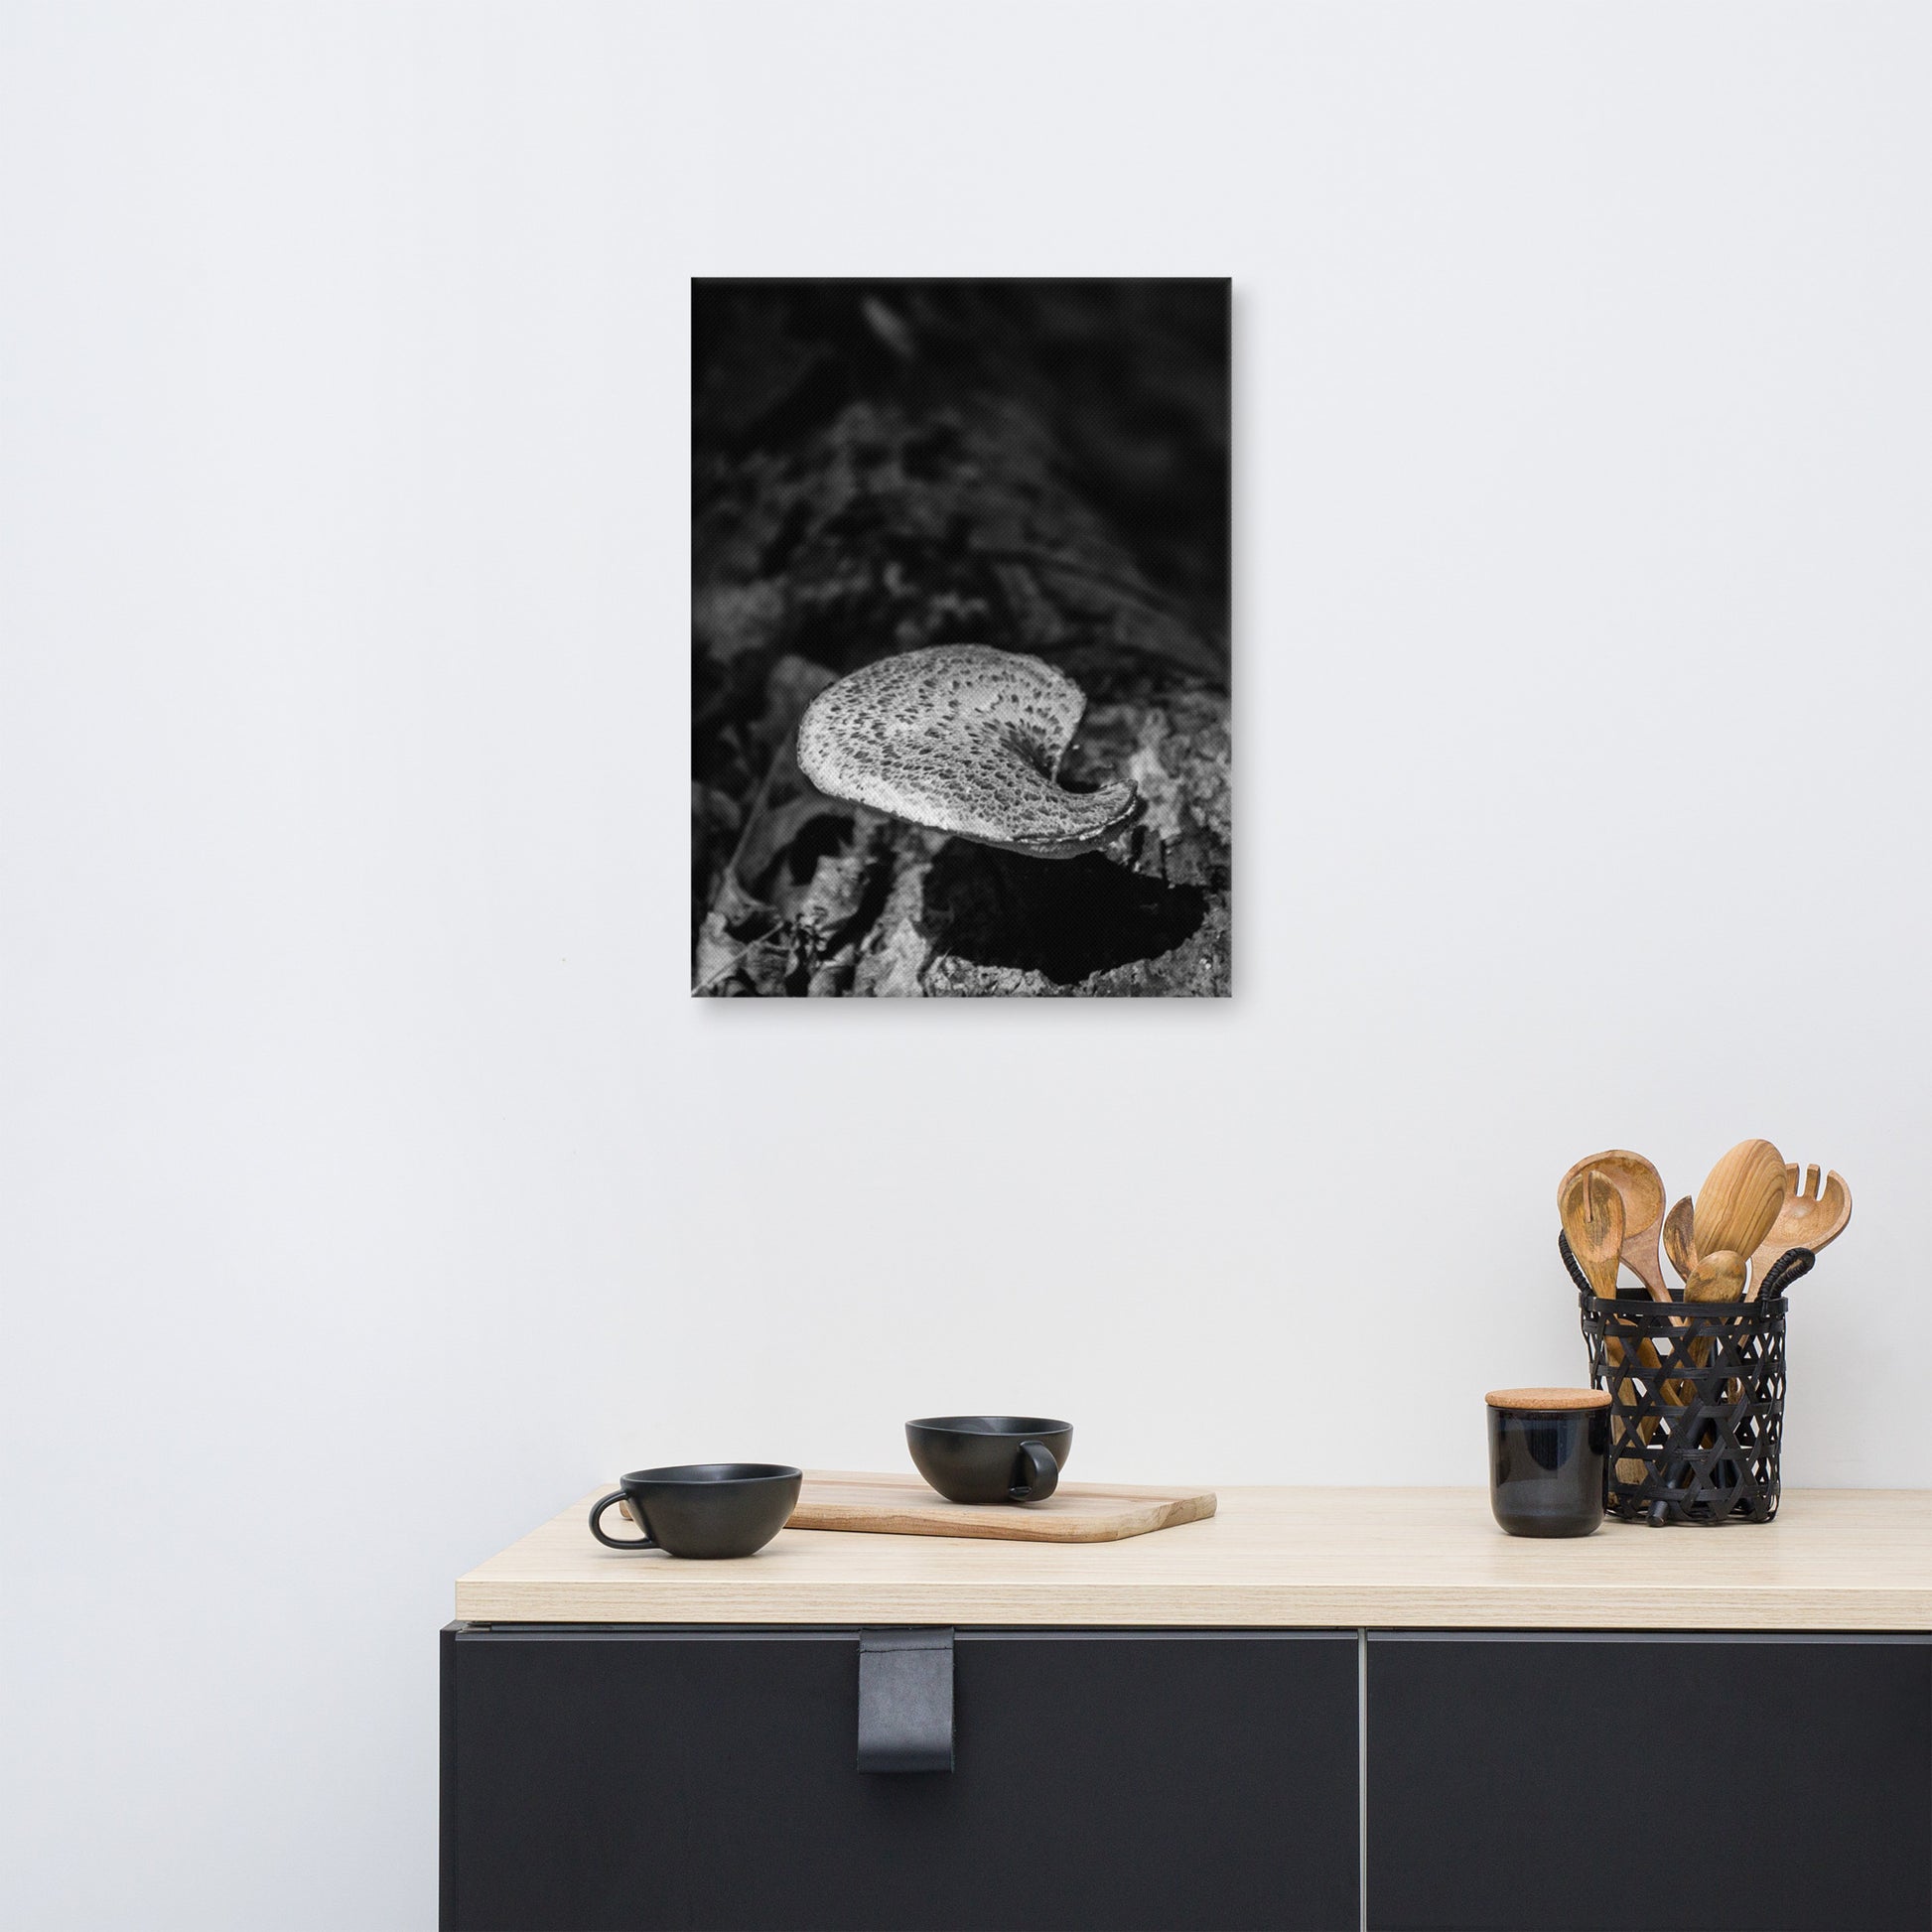 Art For Kitchen Dining Room: Mushroom on Log Black and White Botanical Nature Canvas Wall Art Prints